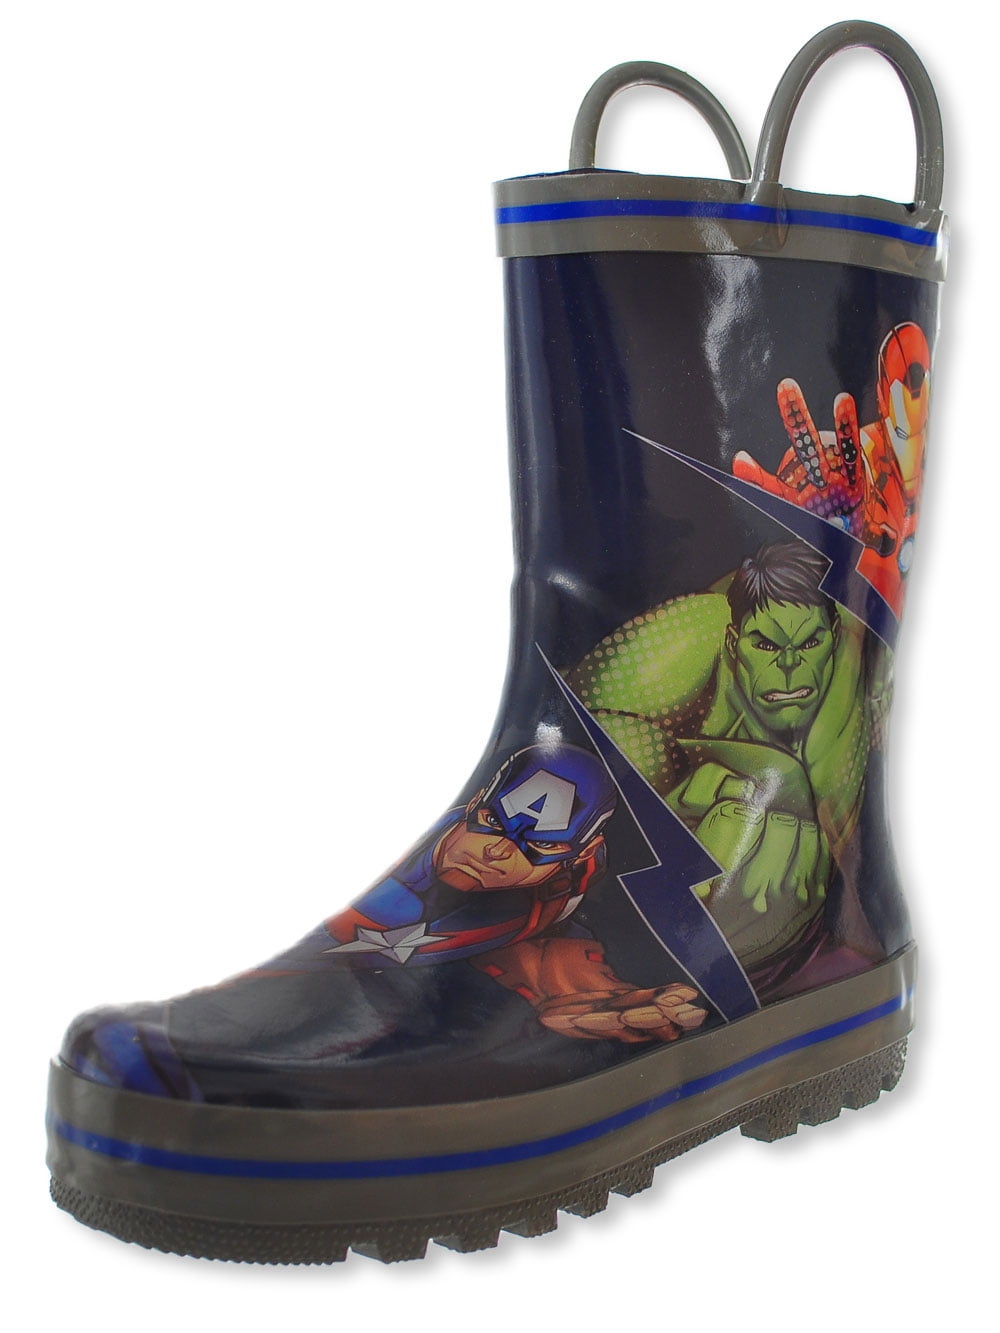 NWT Disney store Boy Shoes Captain America Rain Boots Marvel Avengers Many sizes 